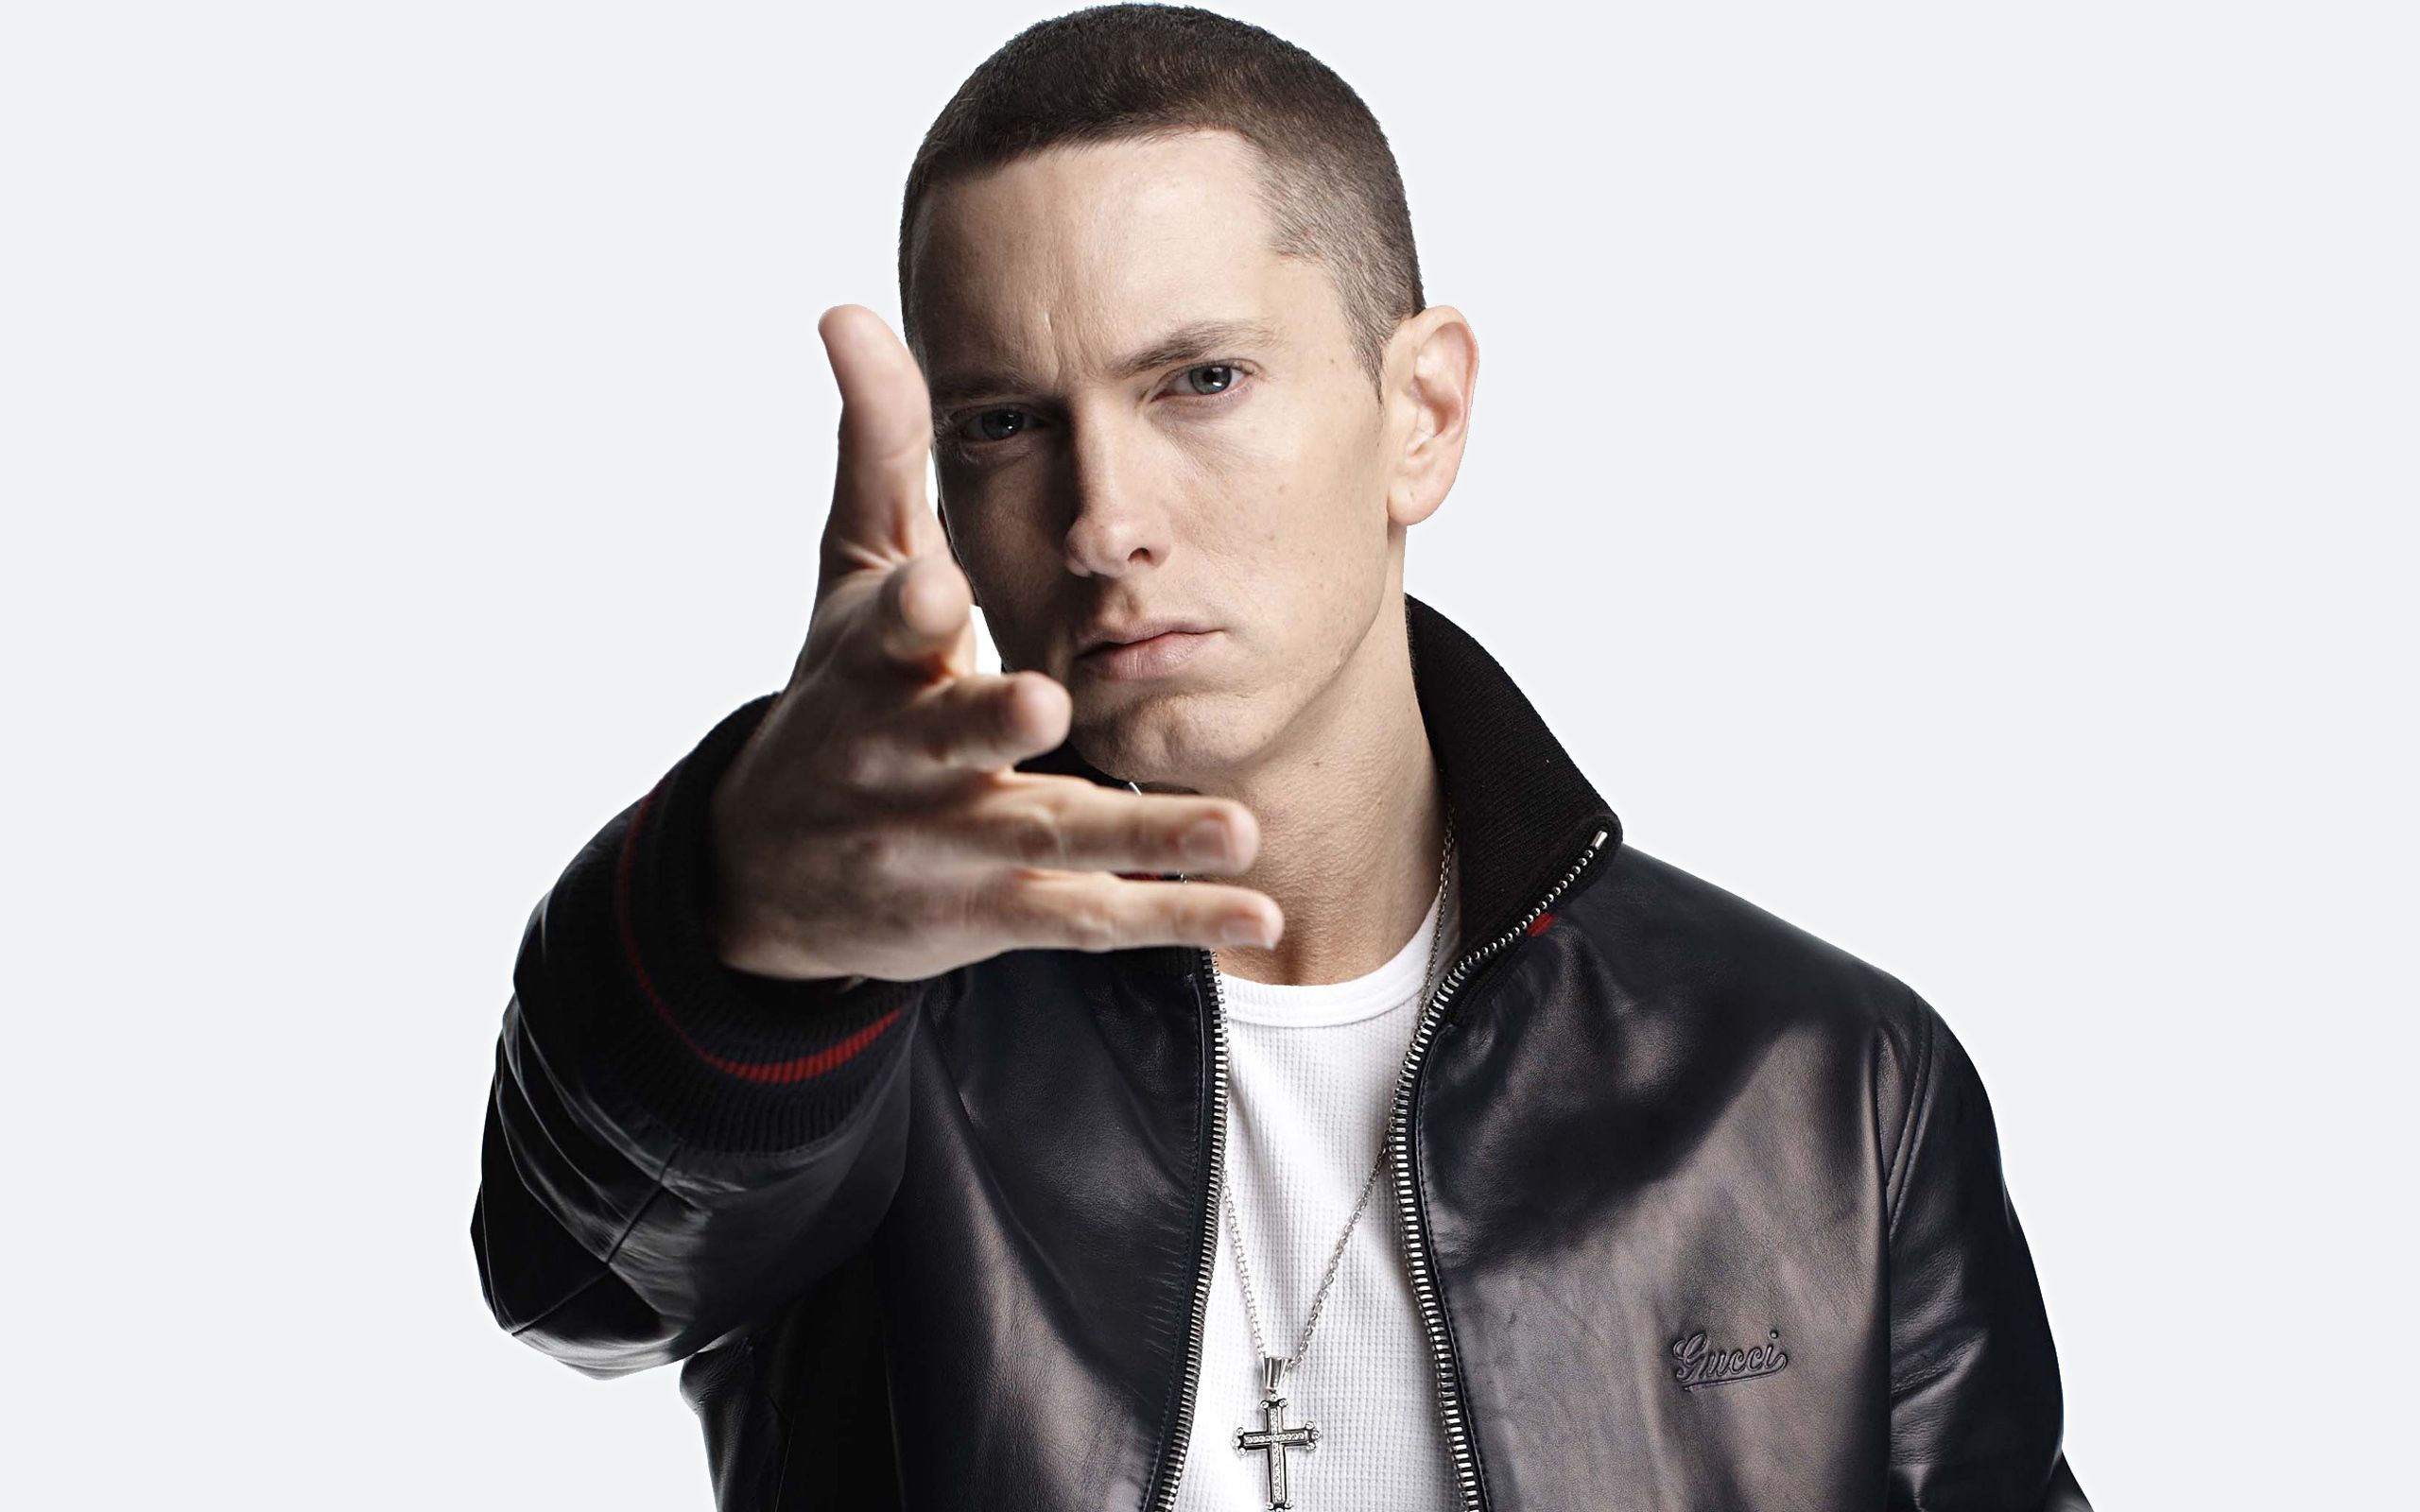 Eminem 4K wallpaper for your desktop or mobile screen free